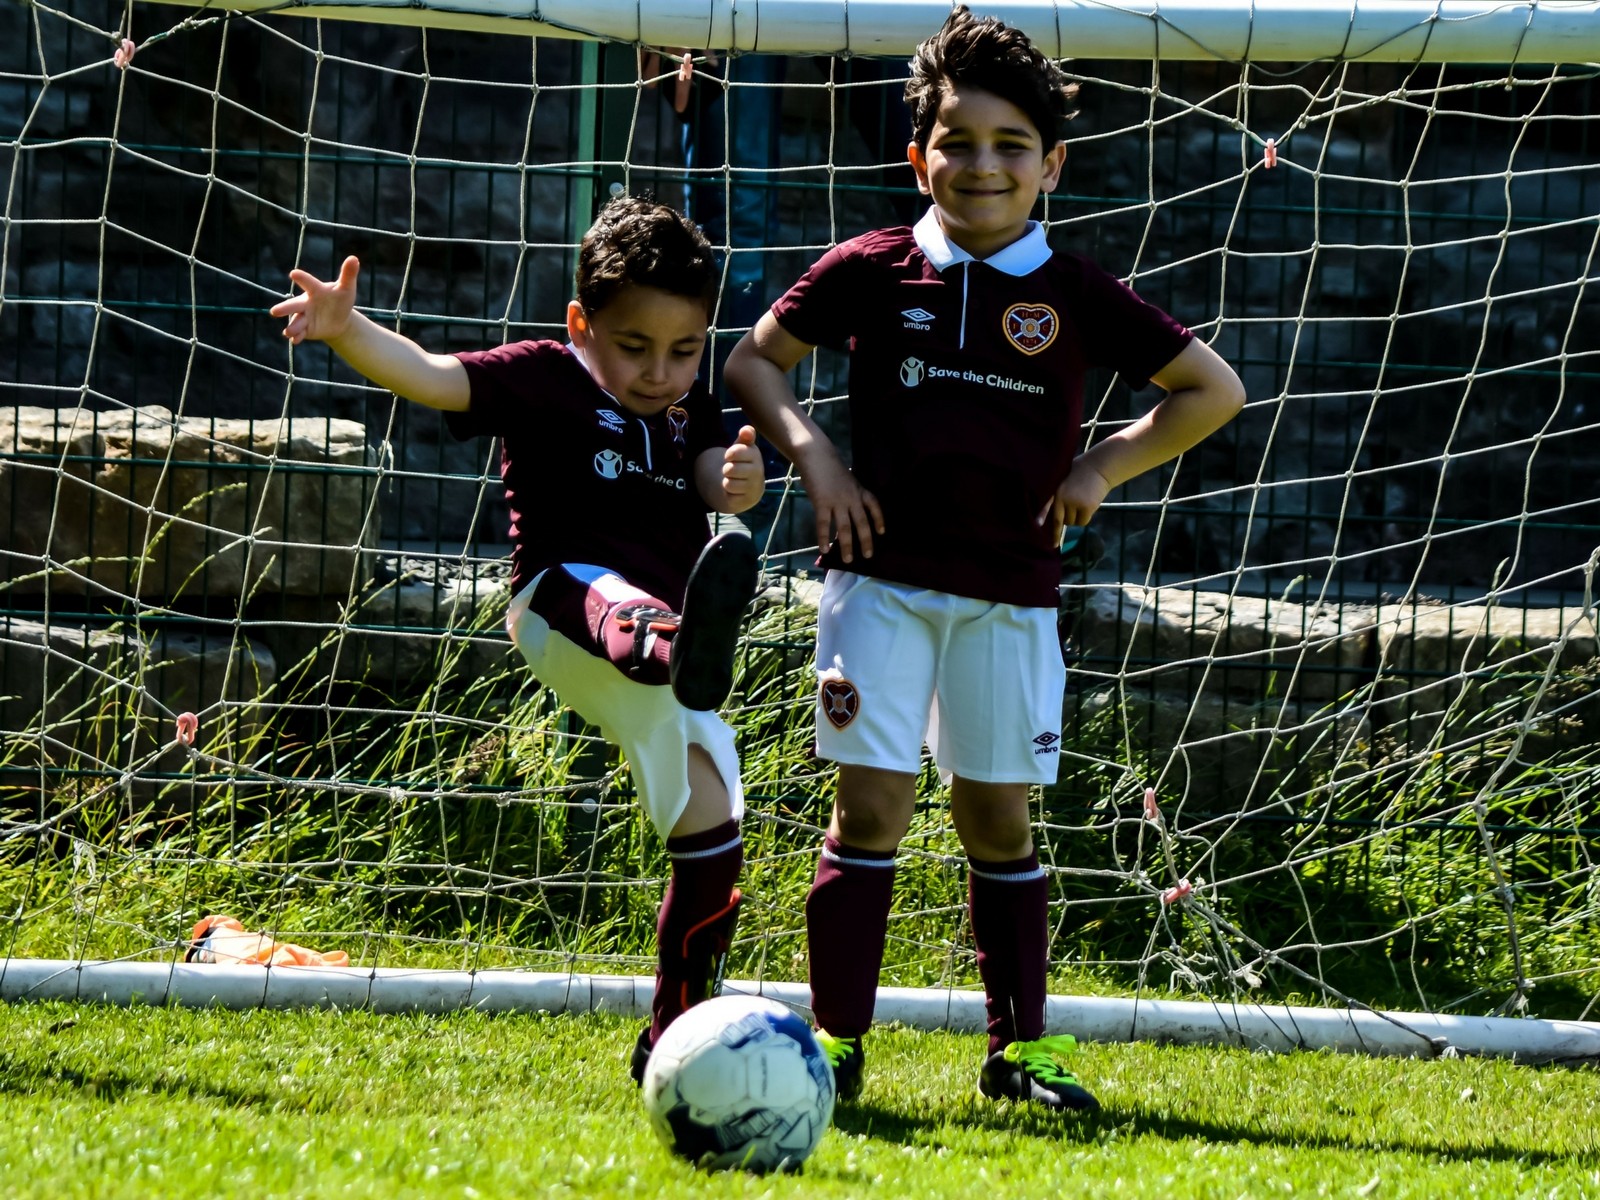  » Big Hearts helps Syrian children access community football